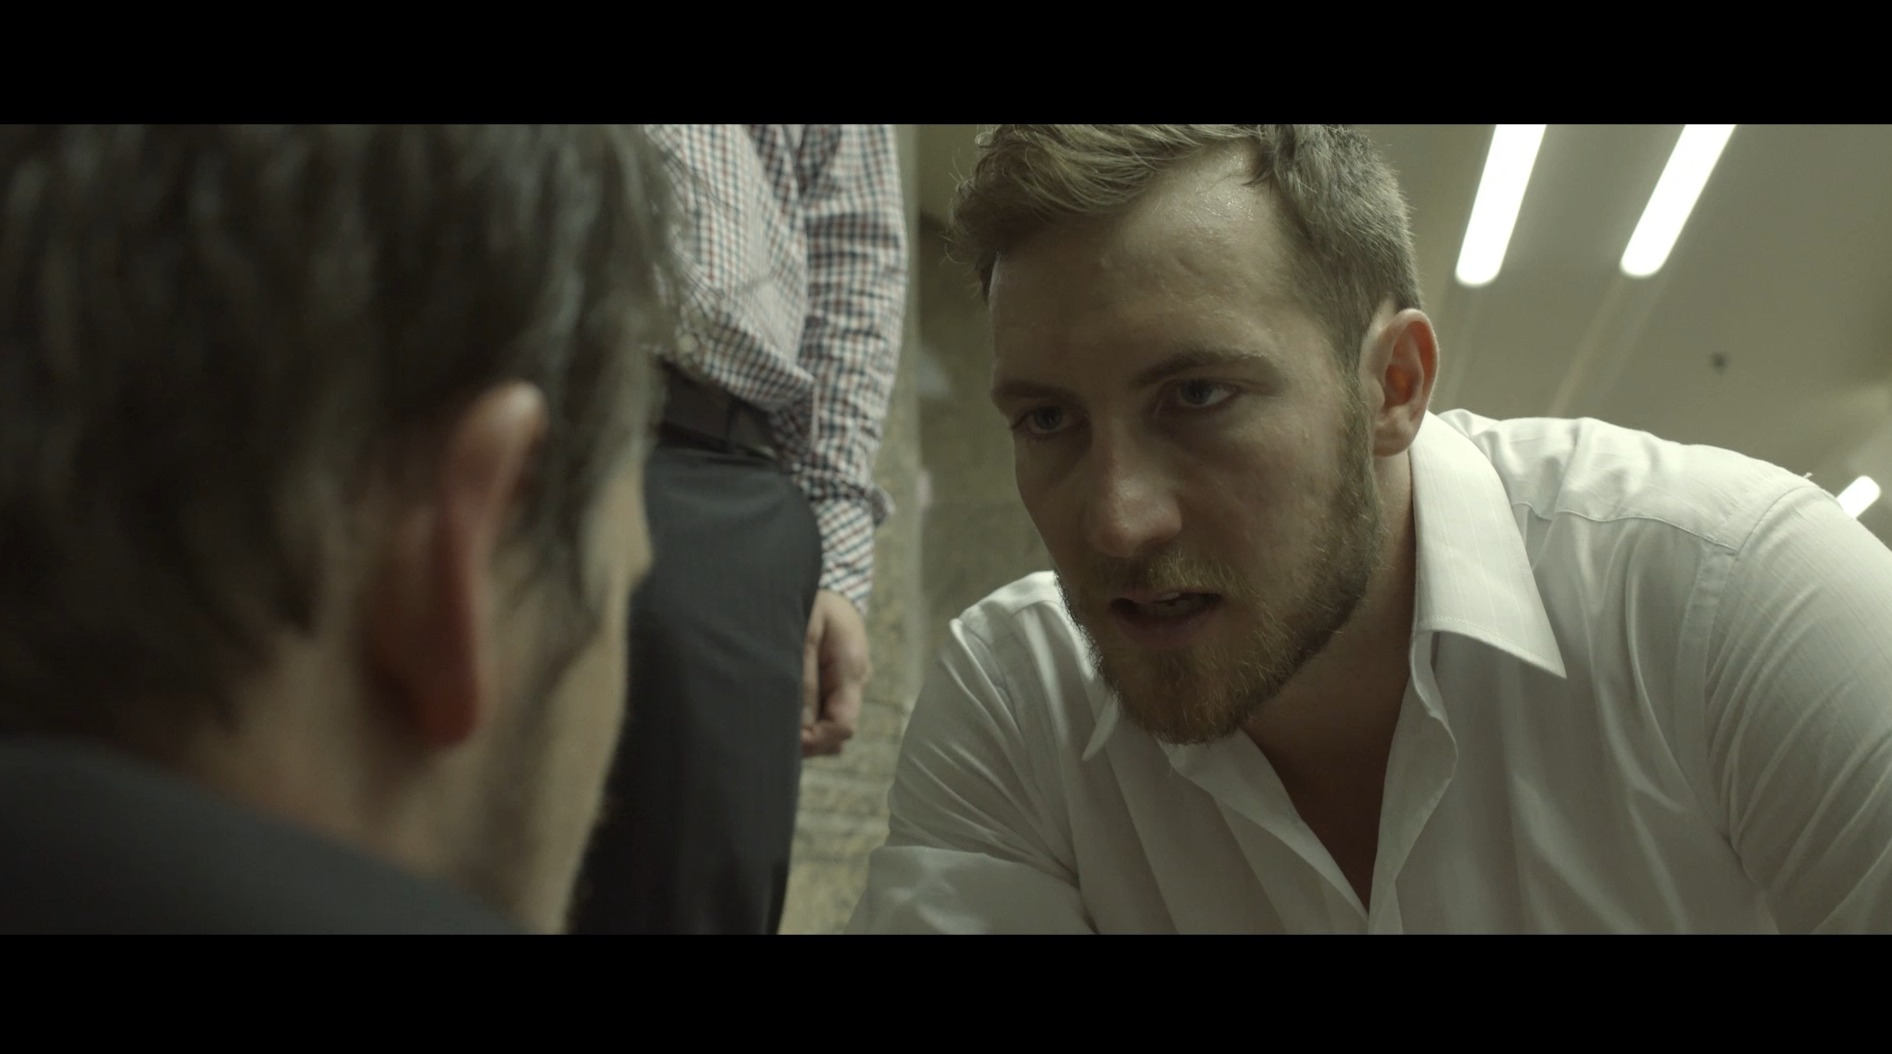 Screenshot from my short film 'Genetics' with actor Aaron Cottrell